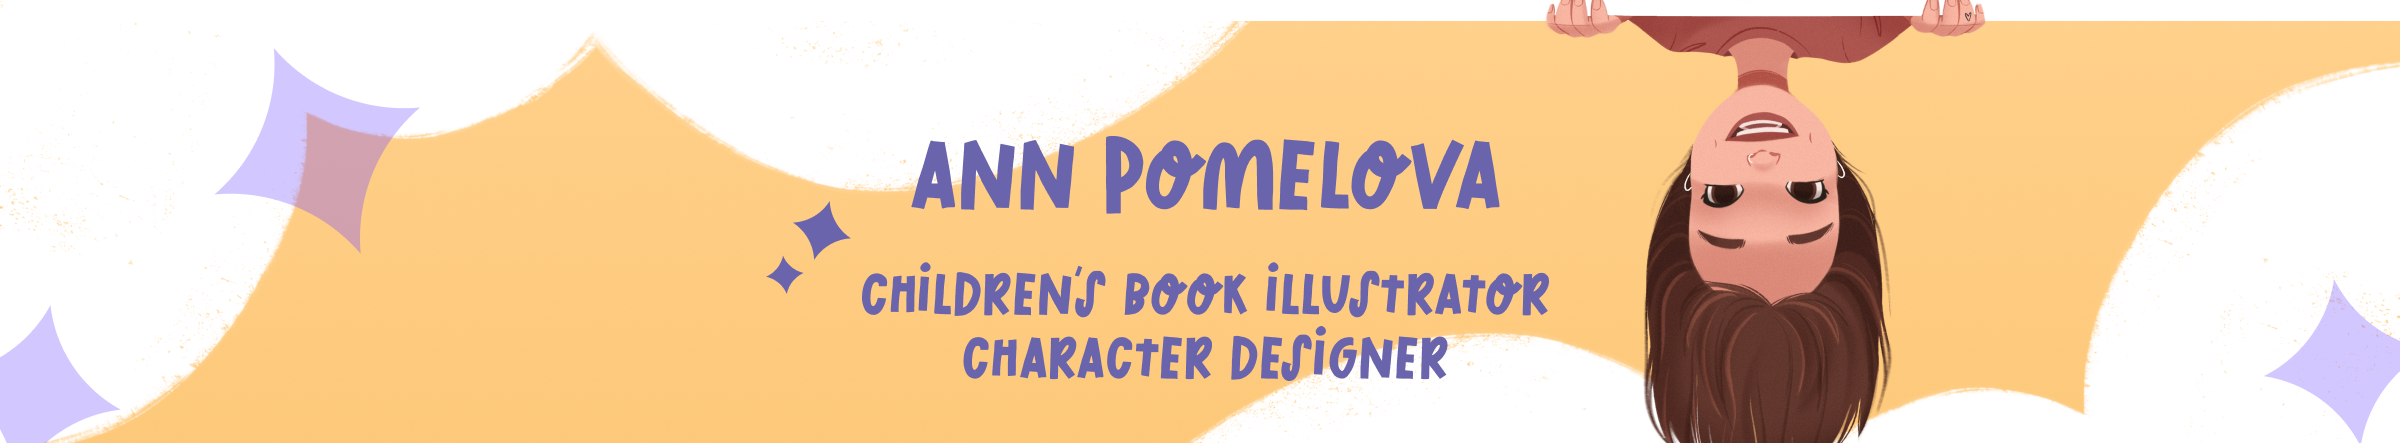 Bannière de profil de Ann Pomelova